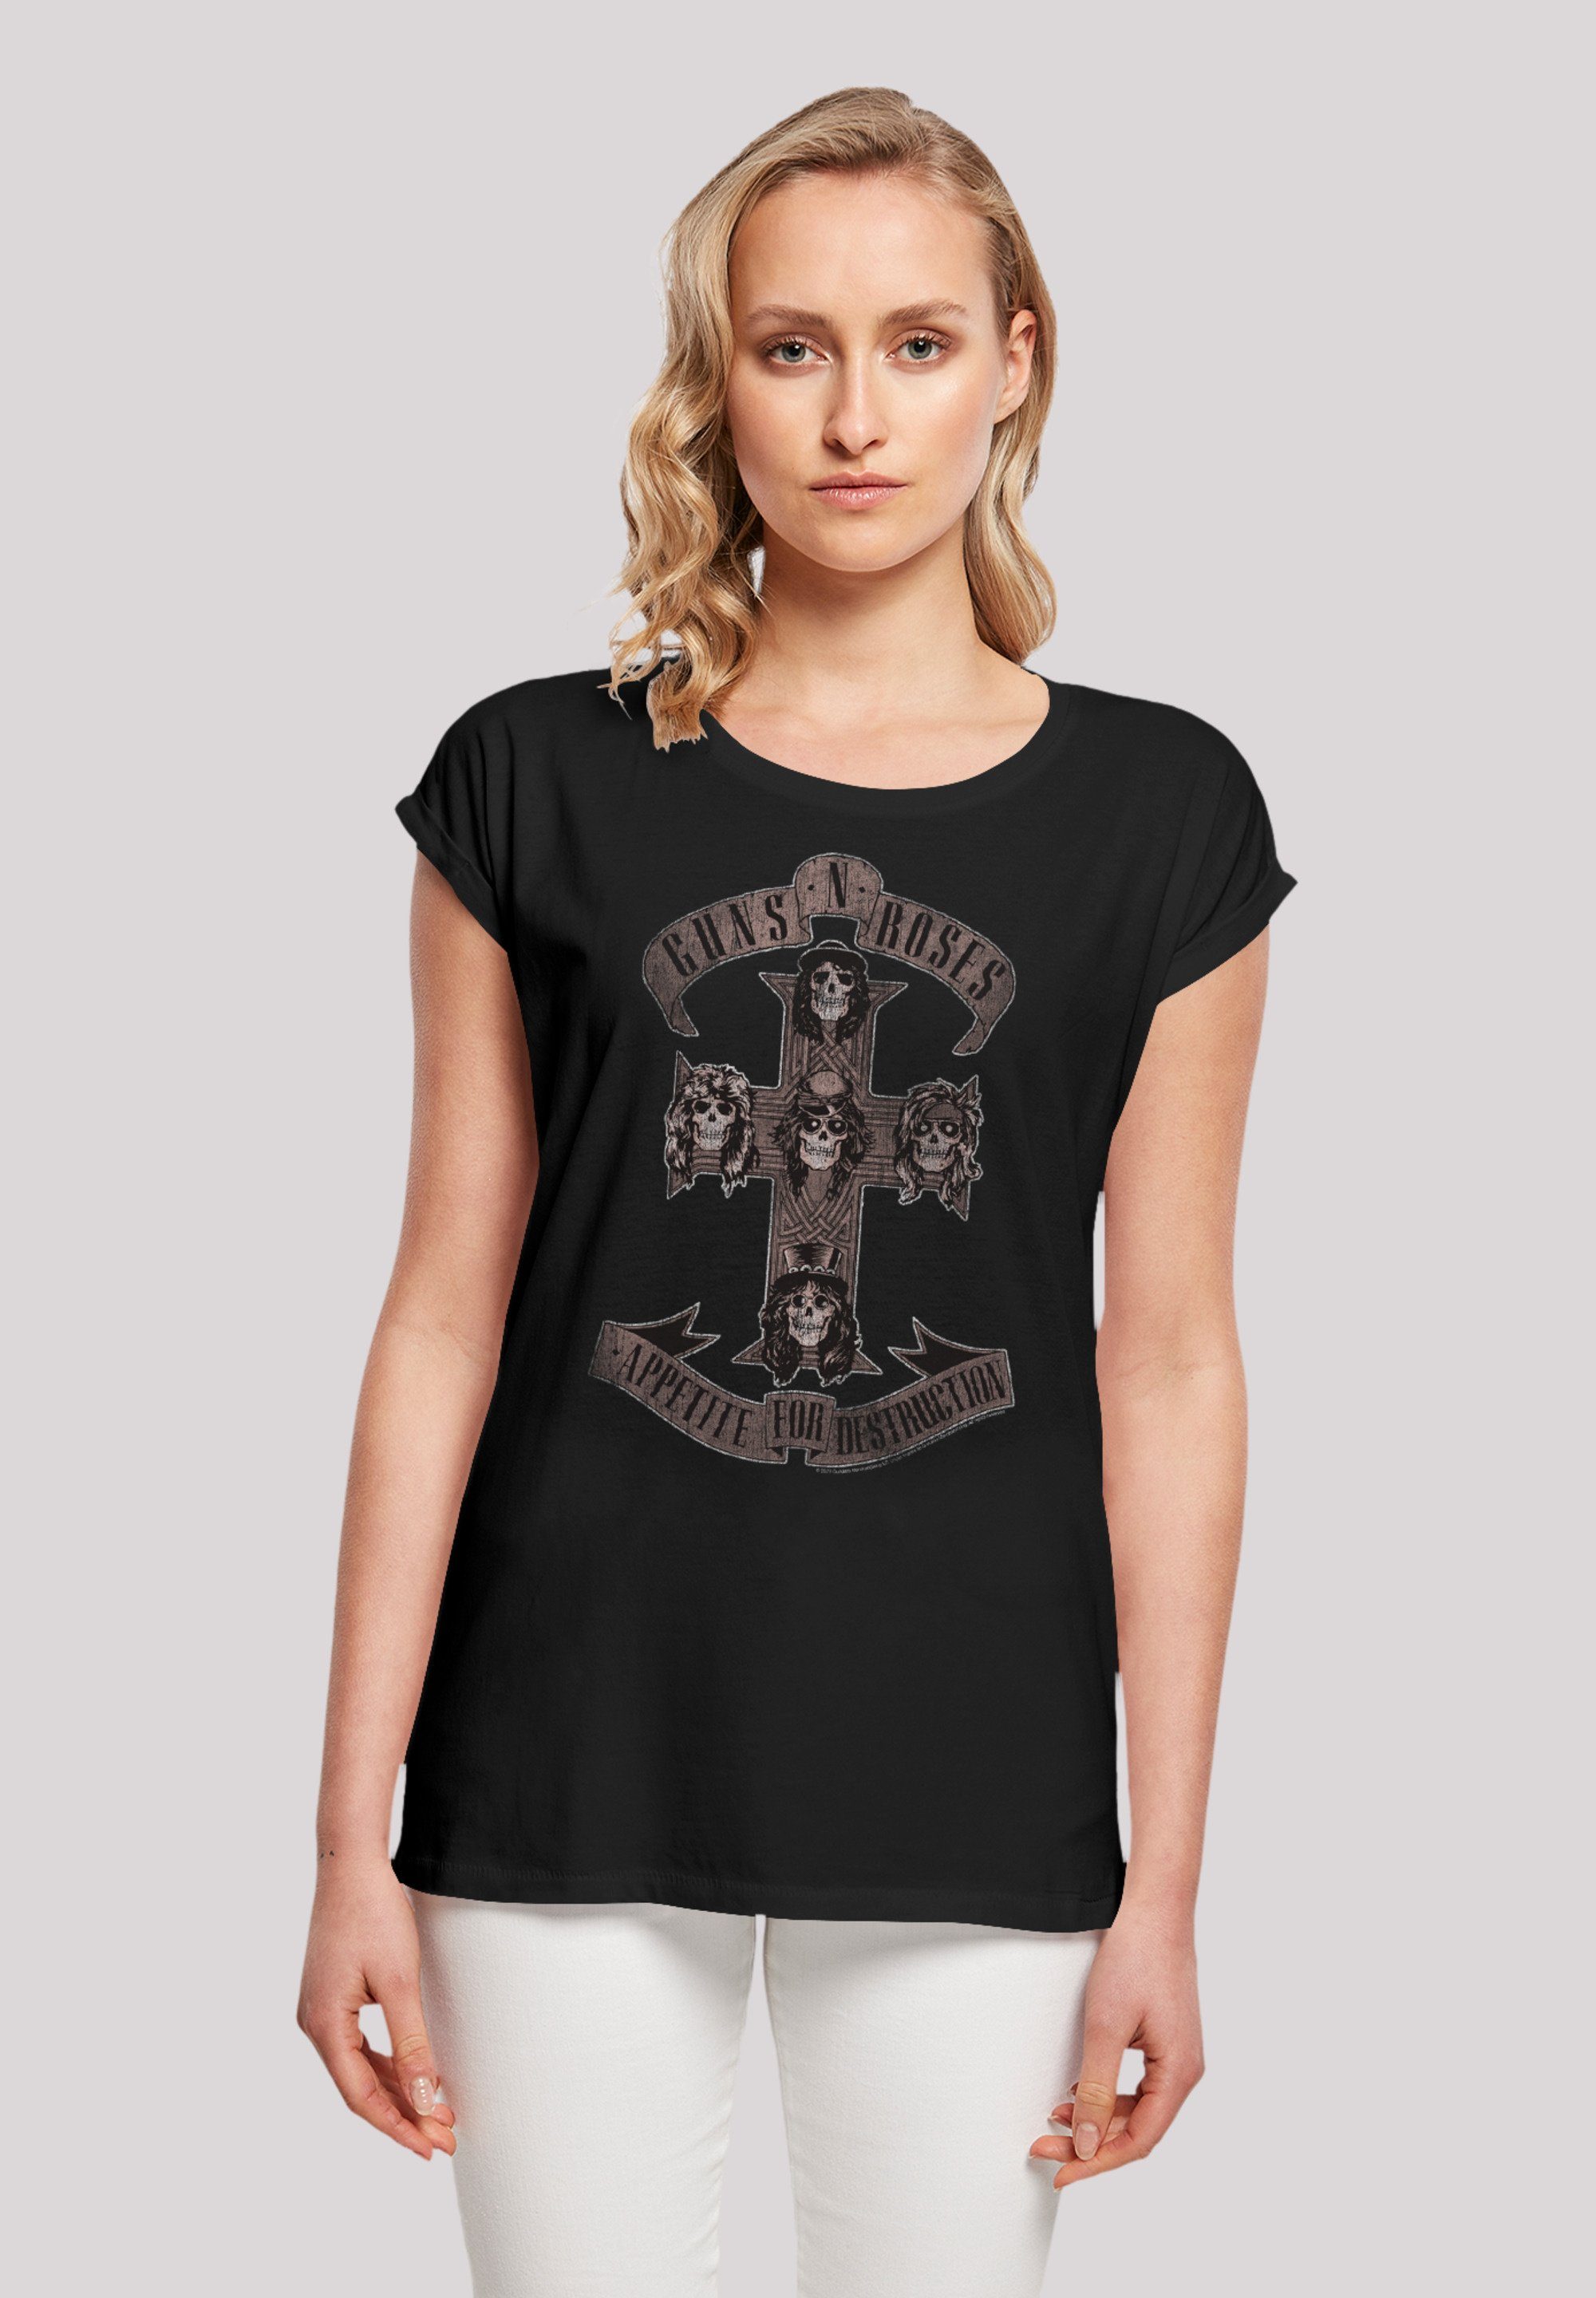 F4NT4STIC T-Shirt Guns 'n' Roses Hard Rock Musik Band Premium Qualität